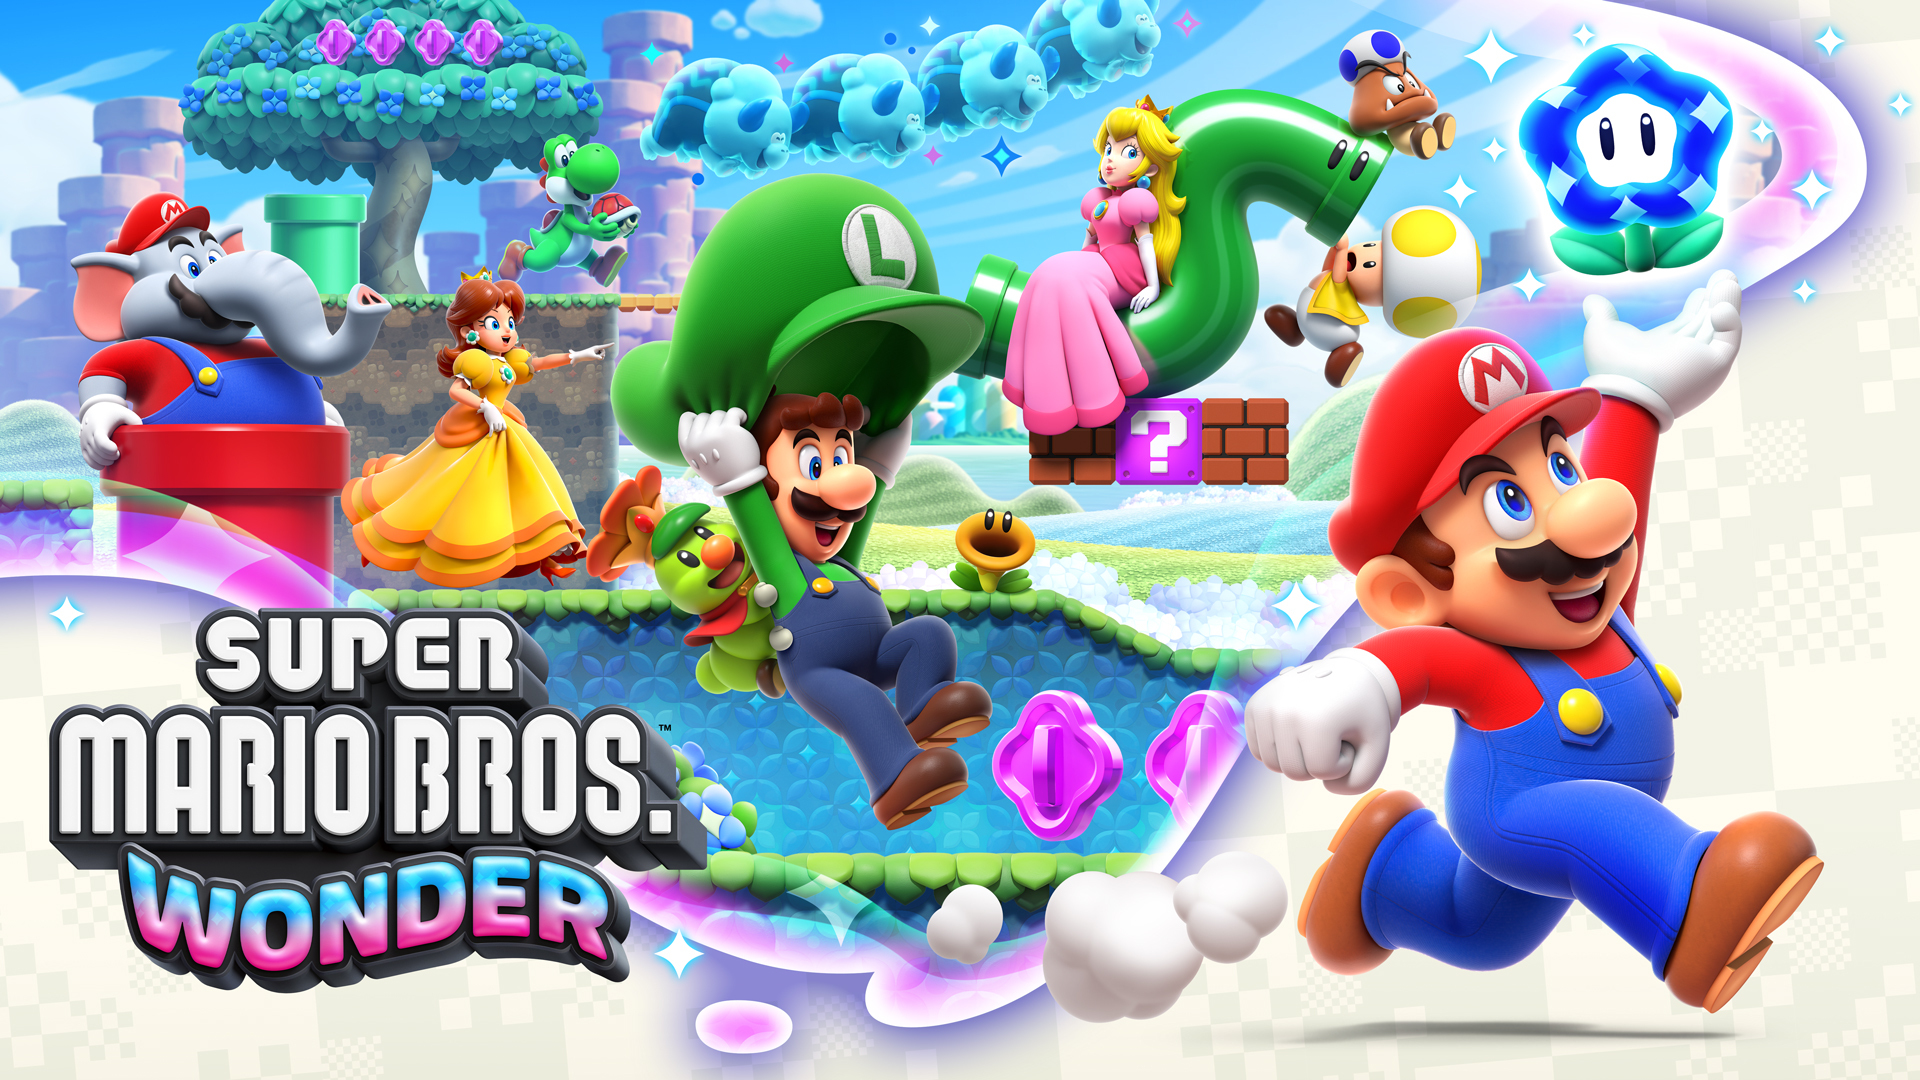 Discover Super Mario Bros. Wonder - Science World